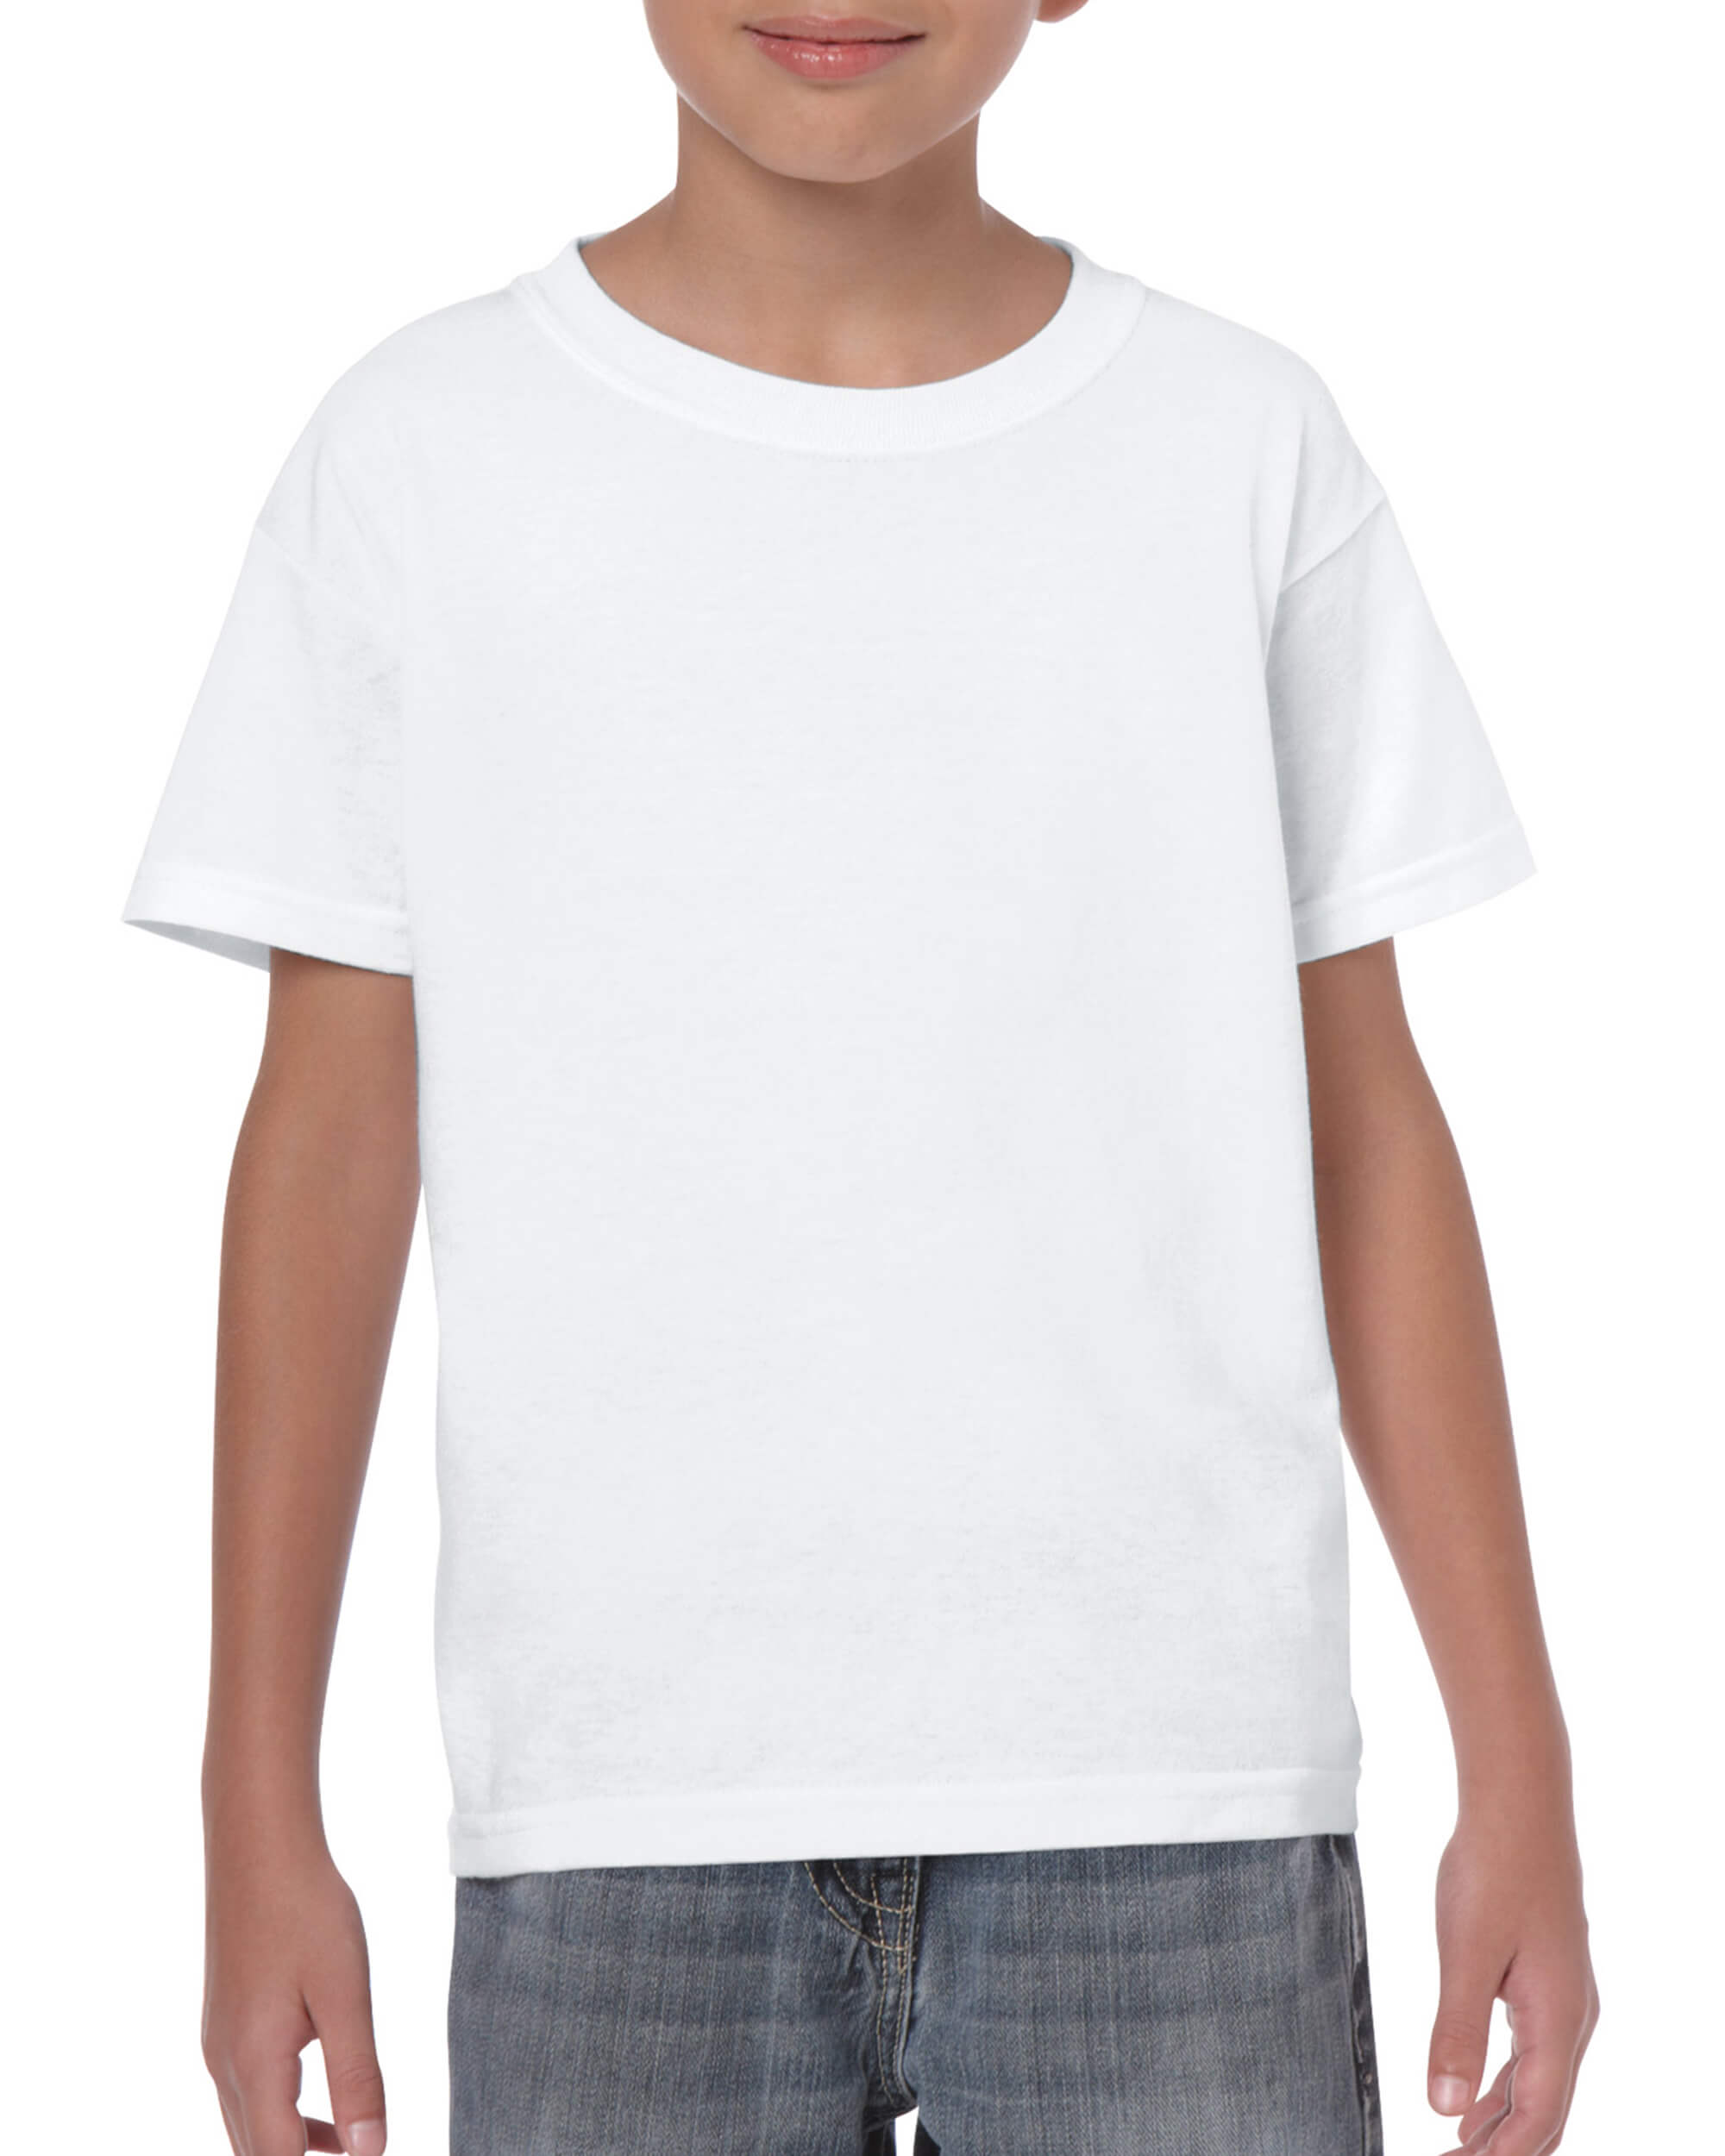 Kids Tshirt - White